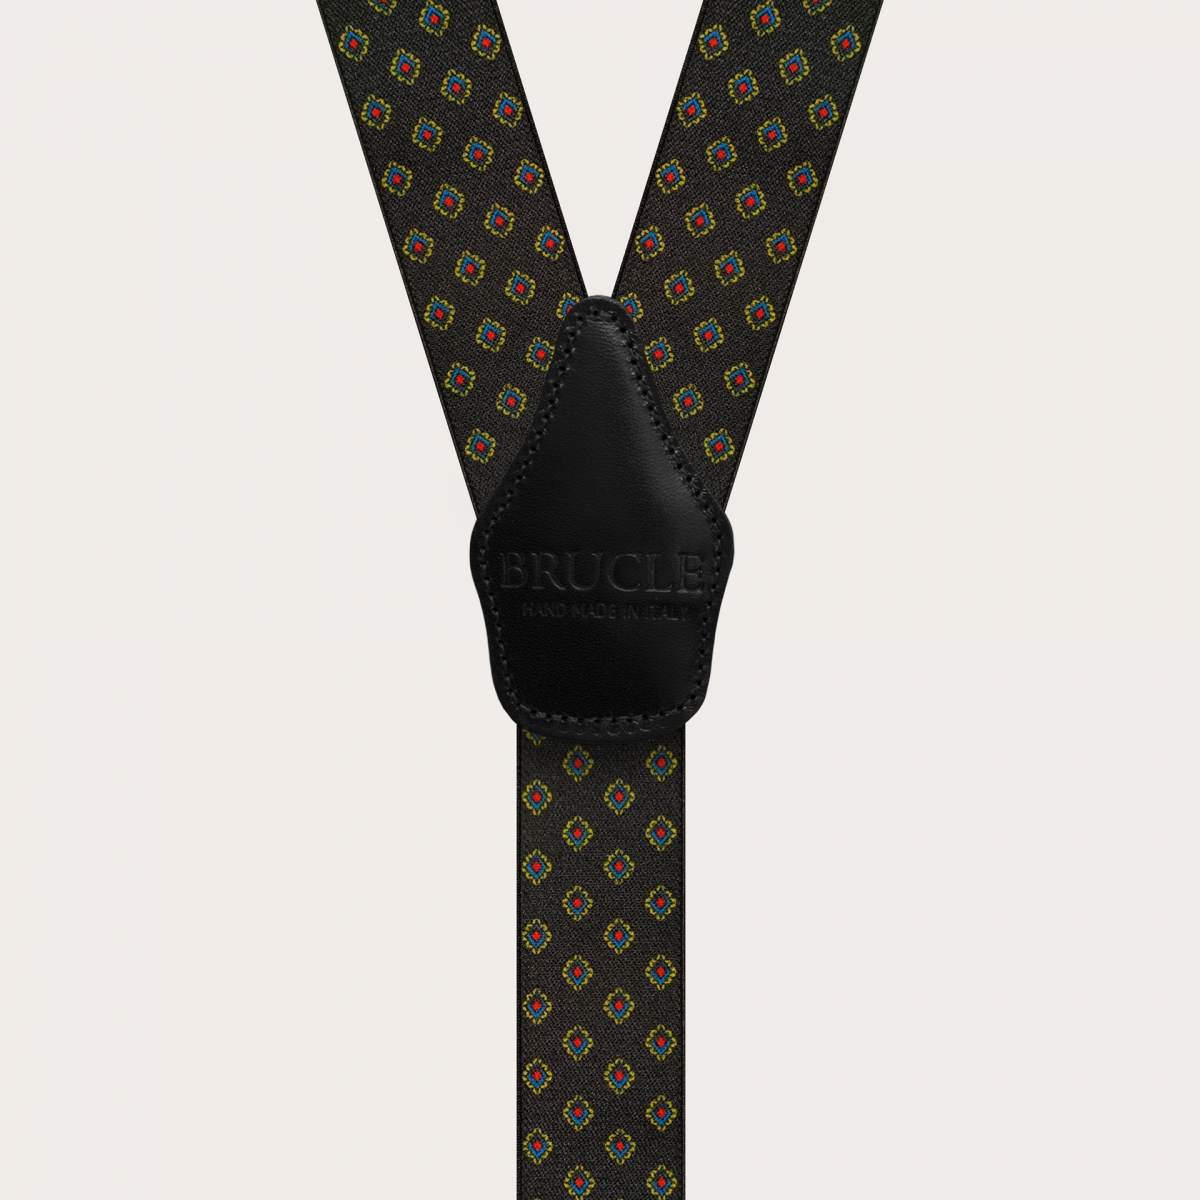 BRUCLE Elastic black suspenders for men with geometric pattern